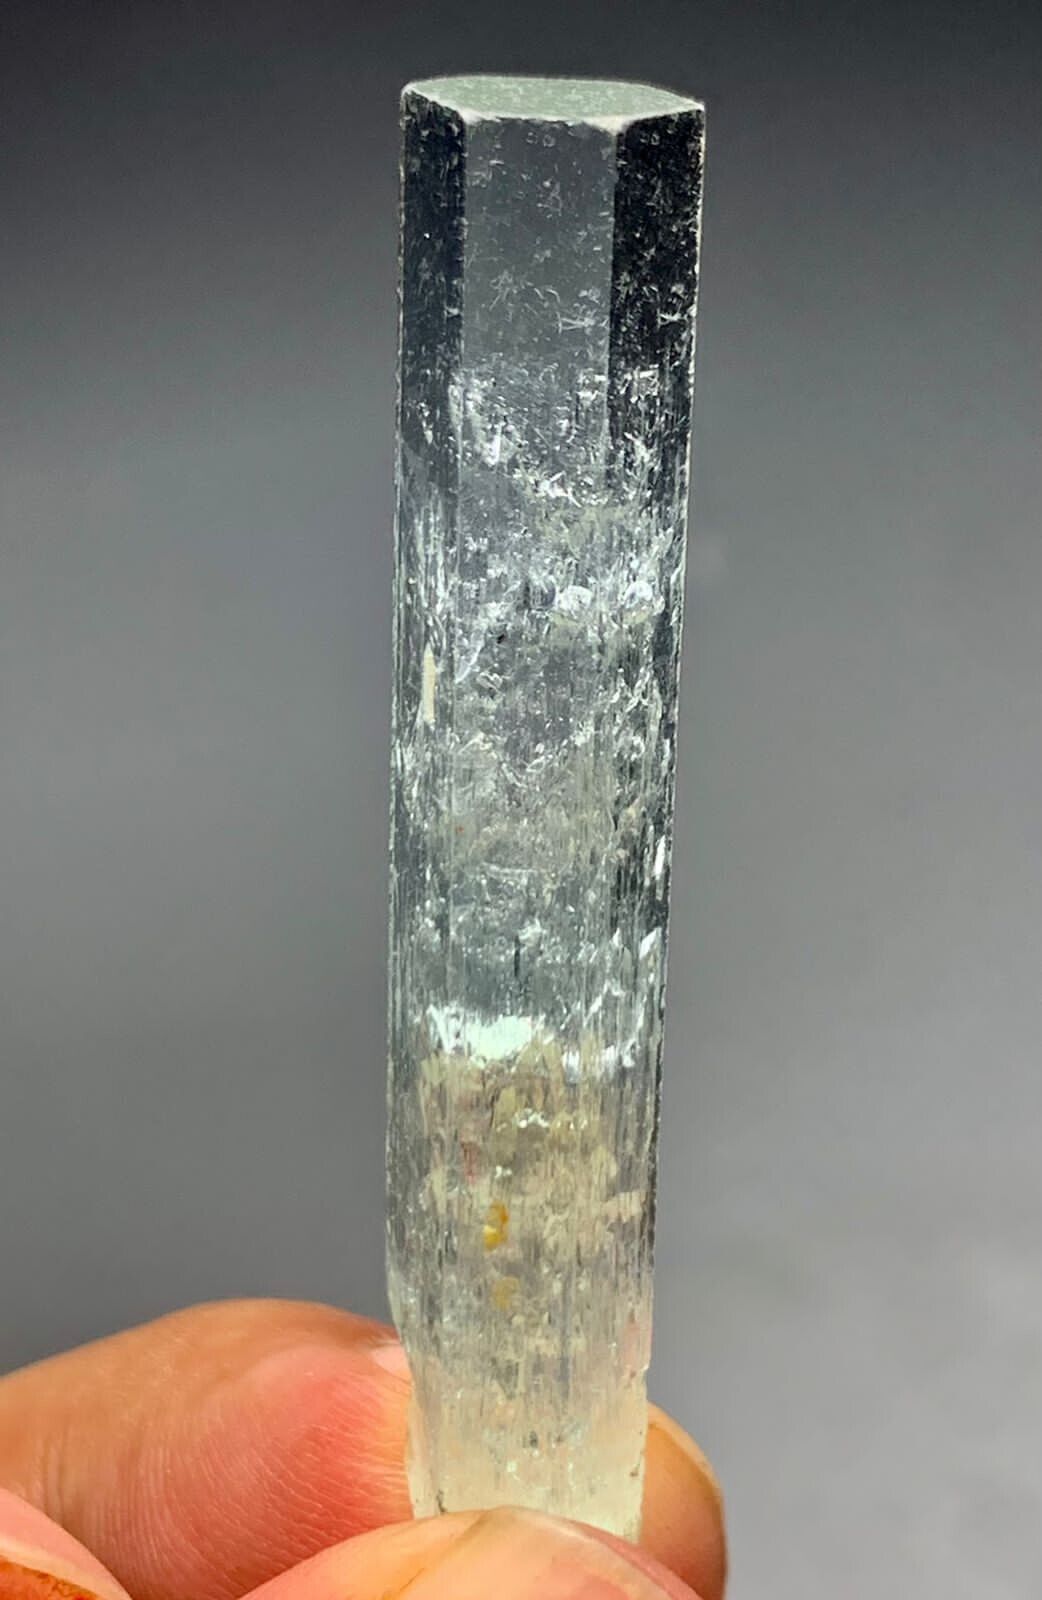 37 Cts Beautiful Top Quality Terminated Aquamarine Crystal from Skardu Pakistan